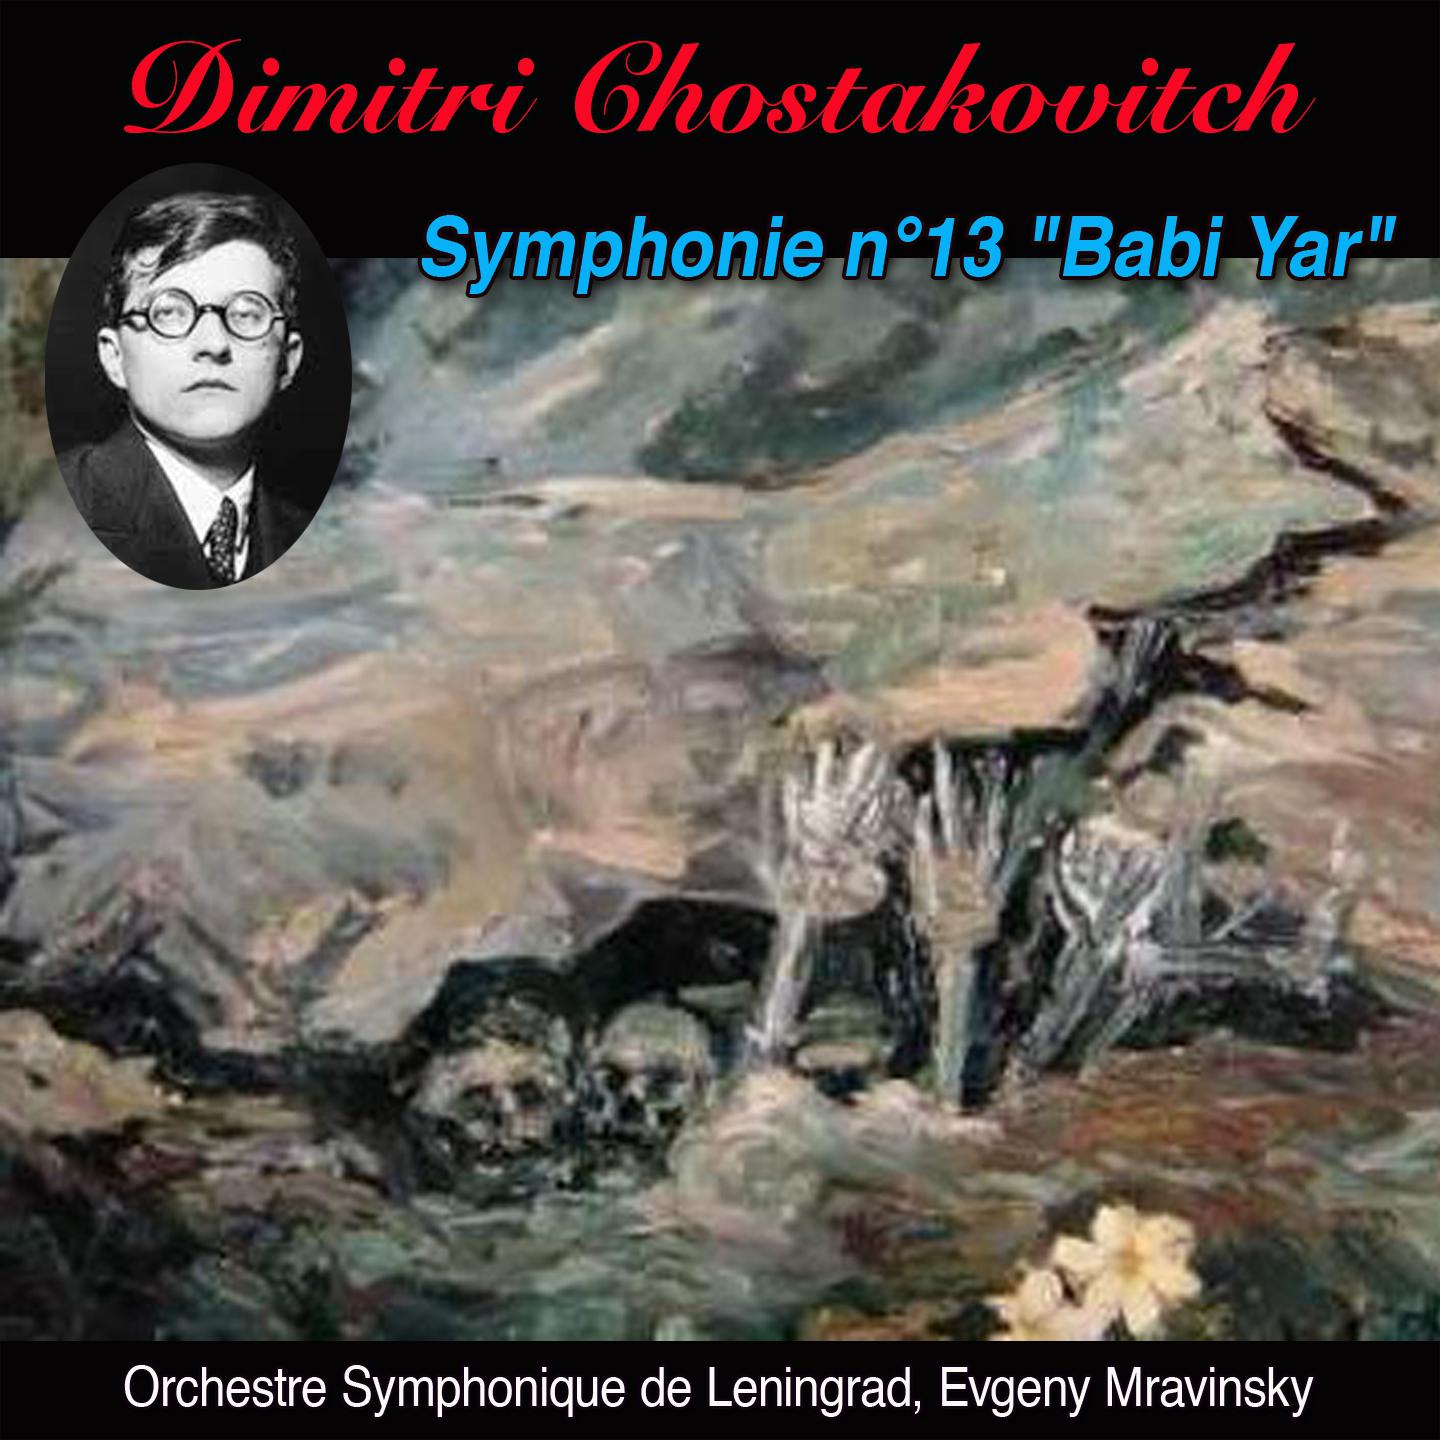 Dimitri chostakovitch, symphonie n 13 " Babi yar"